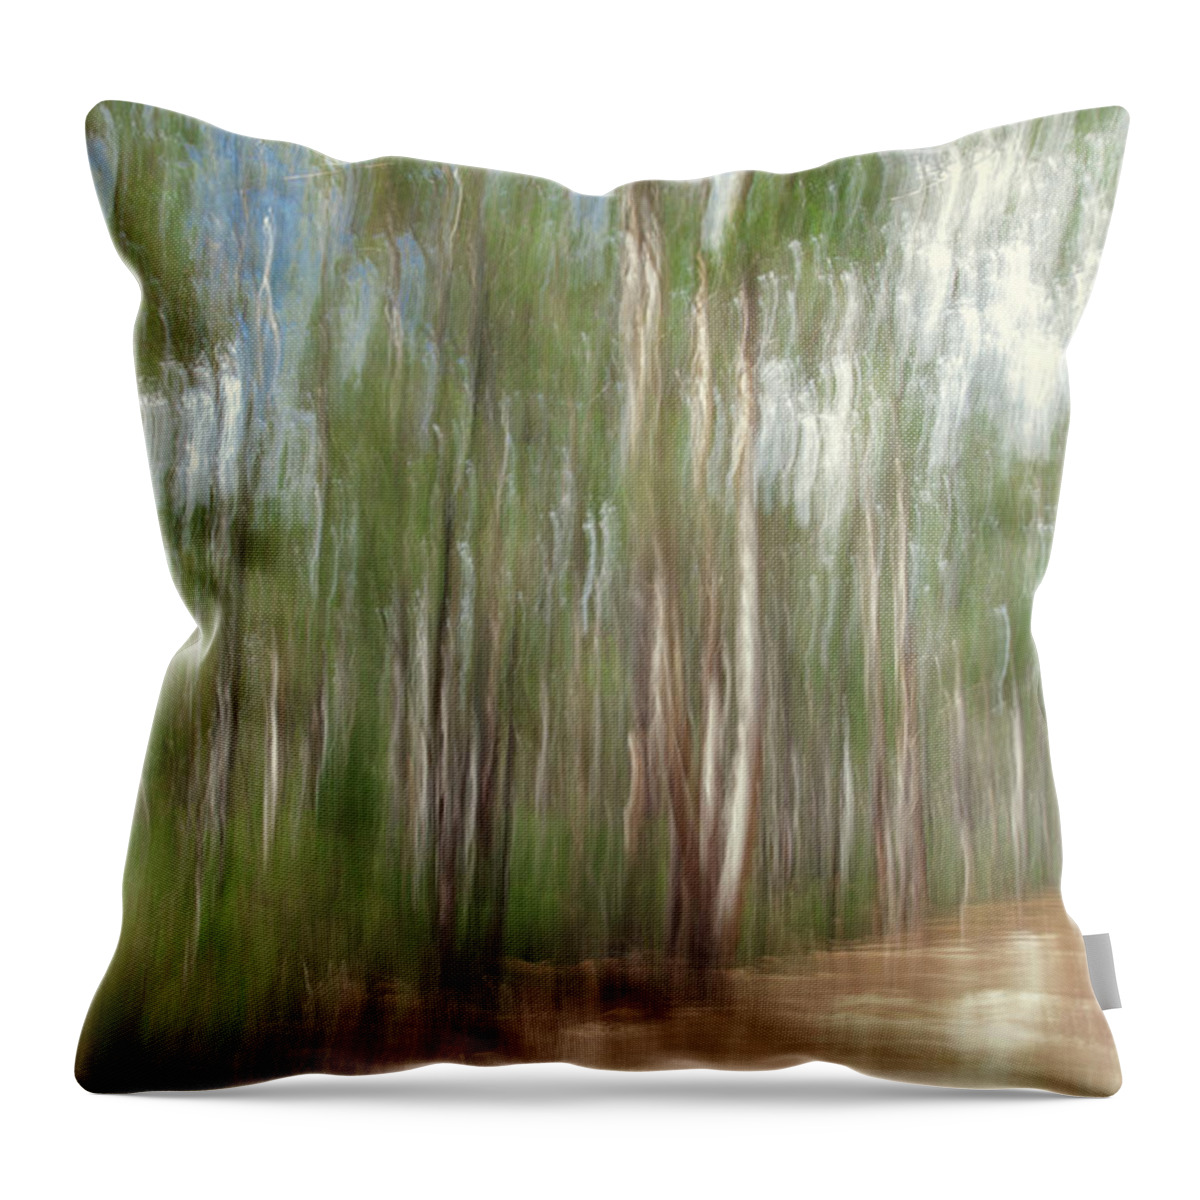 Karri Trees Throw Pillow featuring the photograph Karris by Elaine Teague